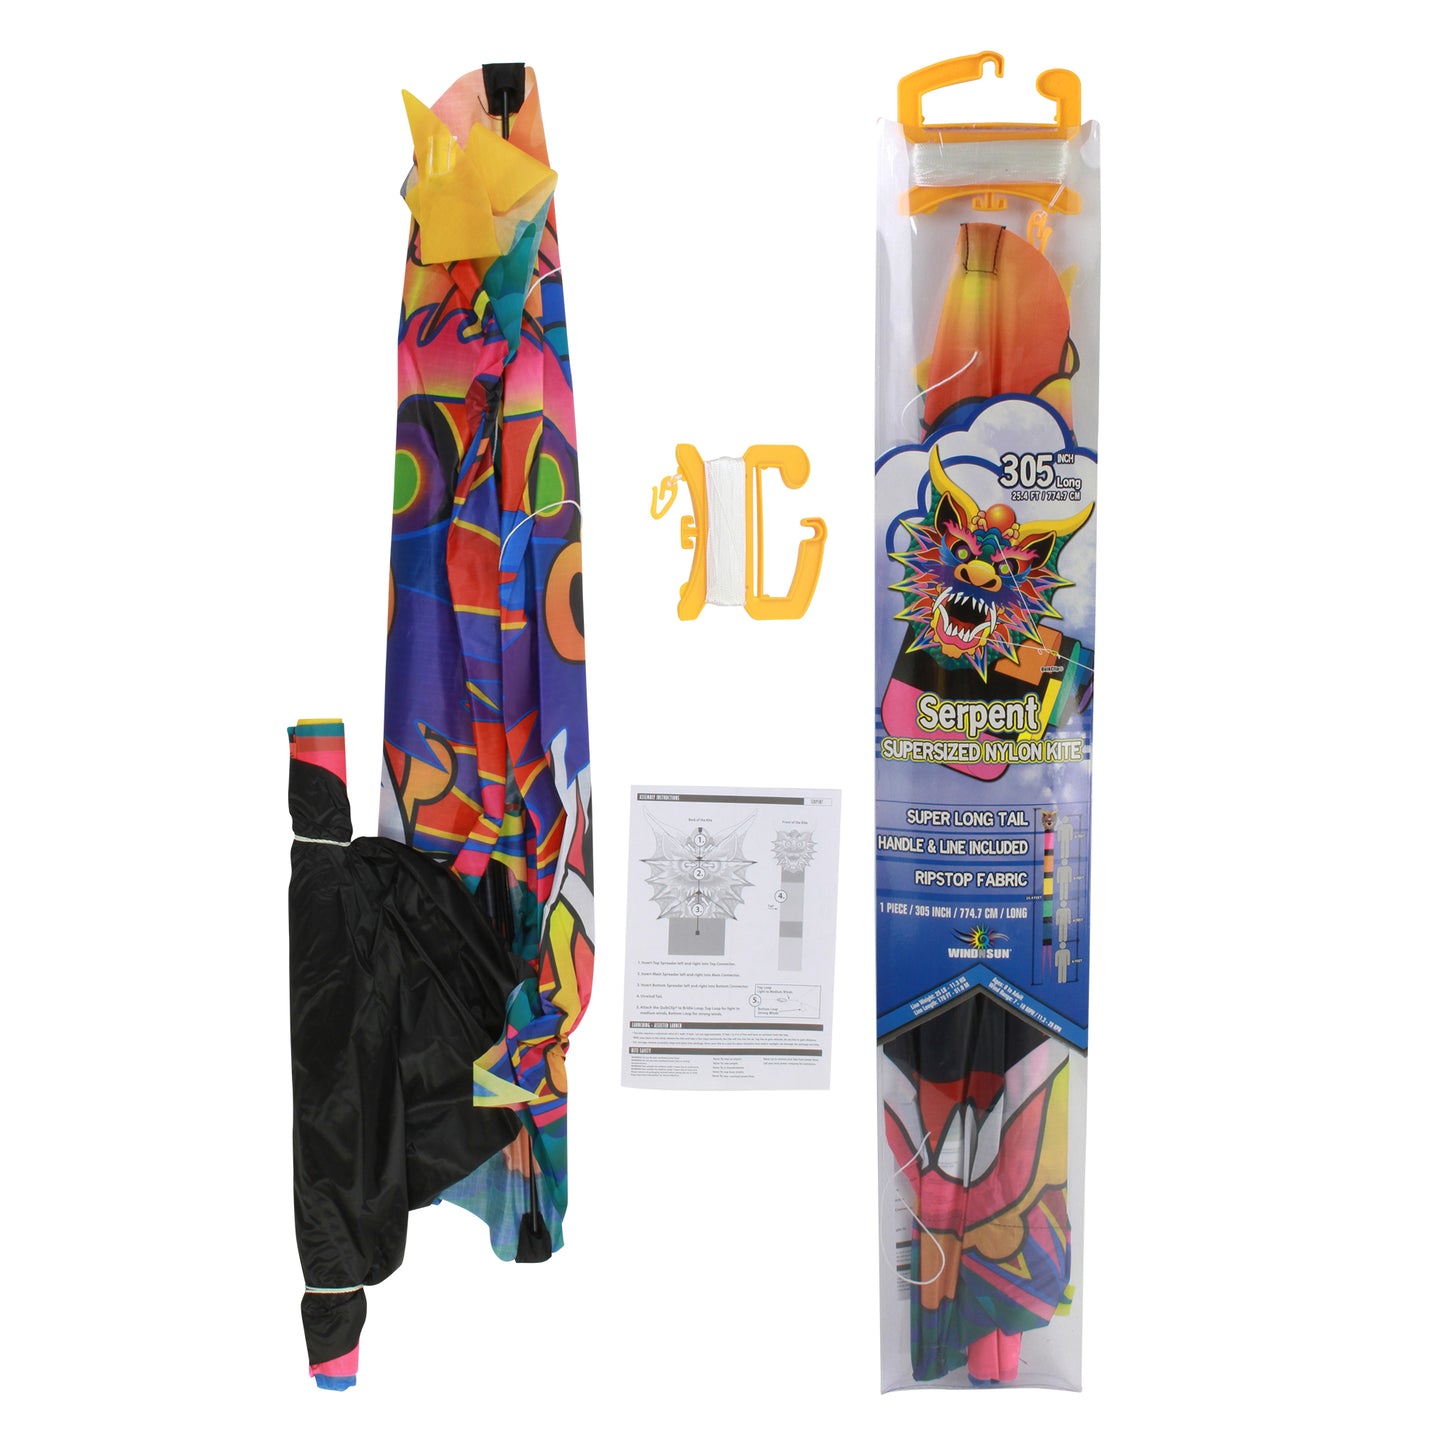 windnsun supersize 3d serpent nylon kite package